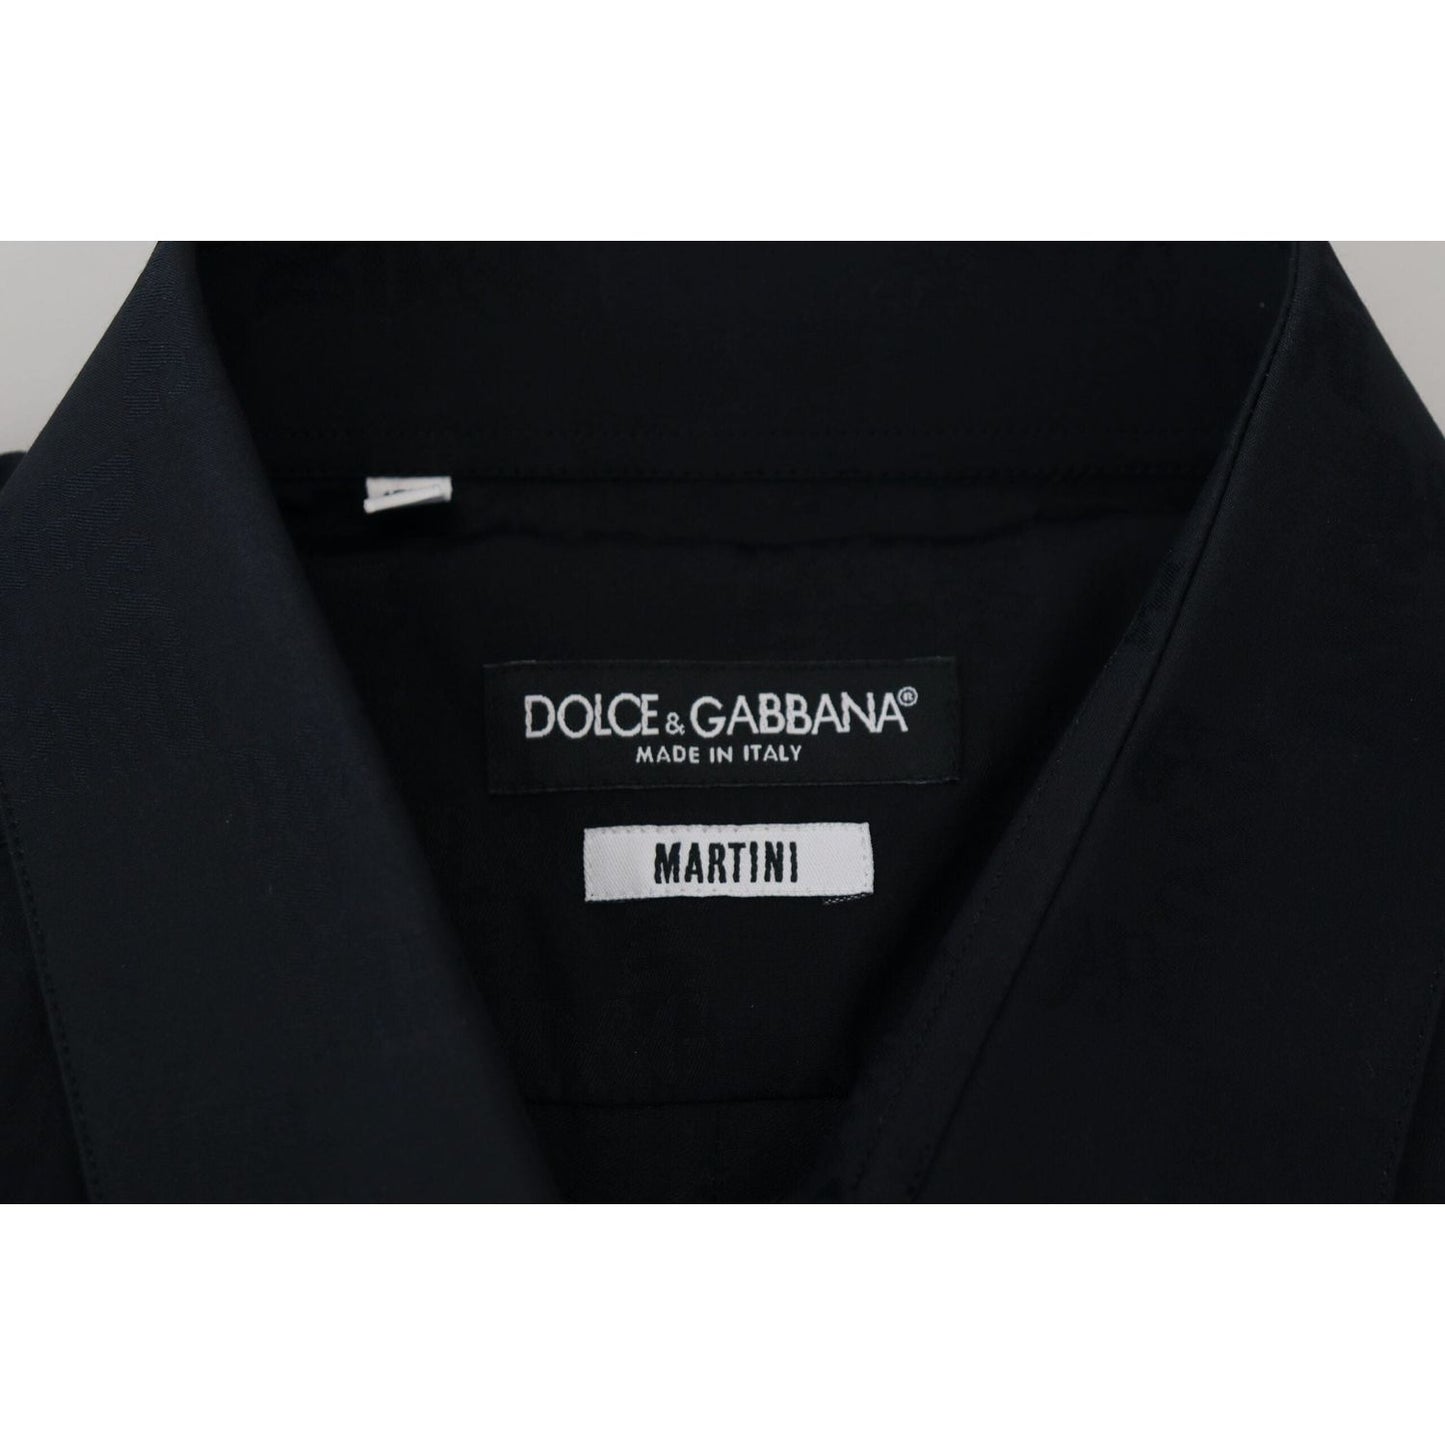 Dolce & Gabbana Elegant Slim Fit Martini Dress Shirt black-cotton-dress-formal-martini-shirt